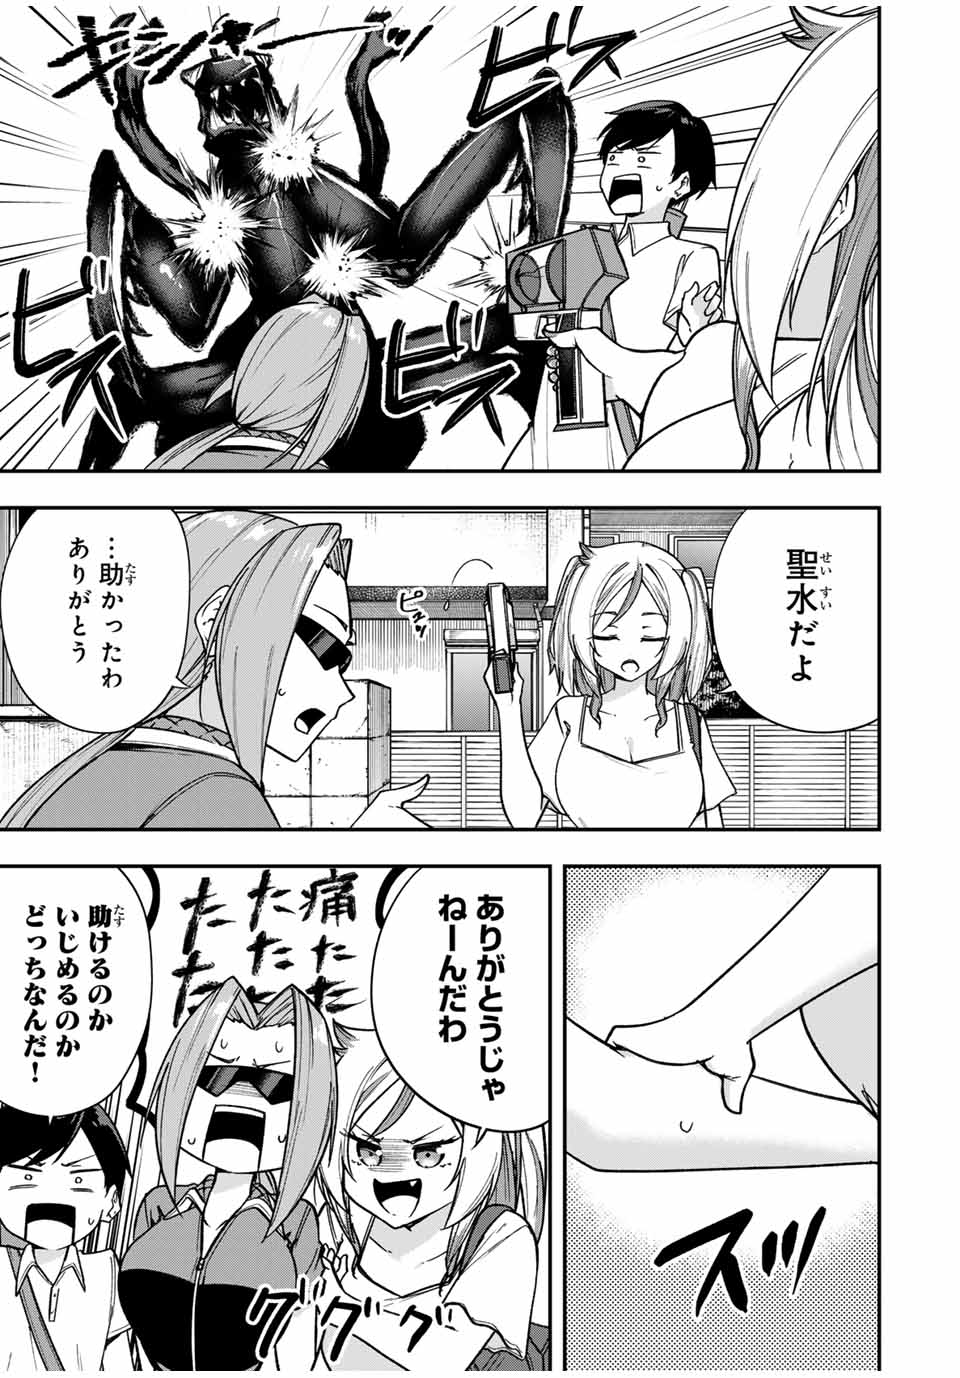 Heroine wa xx Okasegitai - Chapter 6 - Page 3